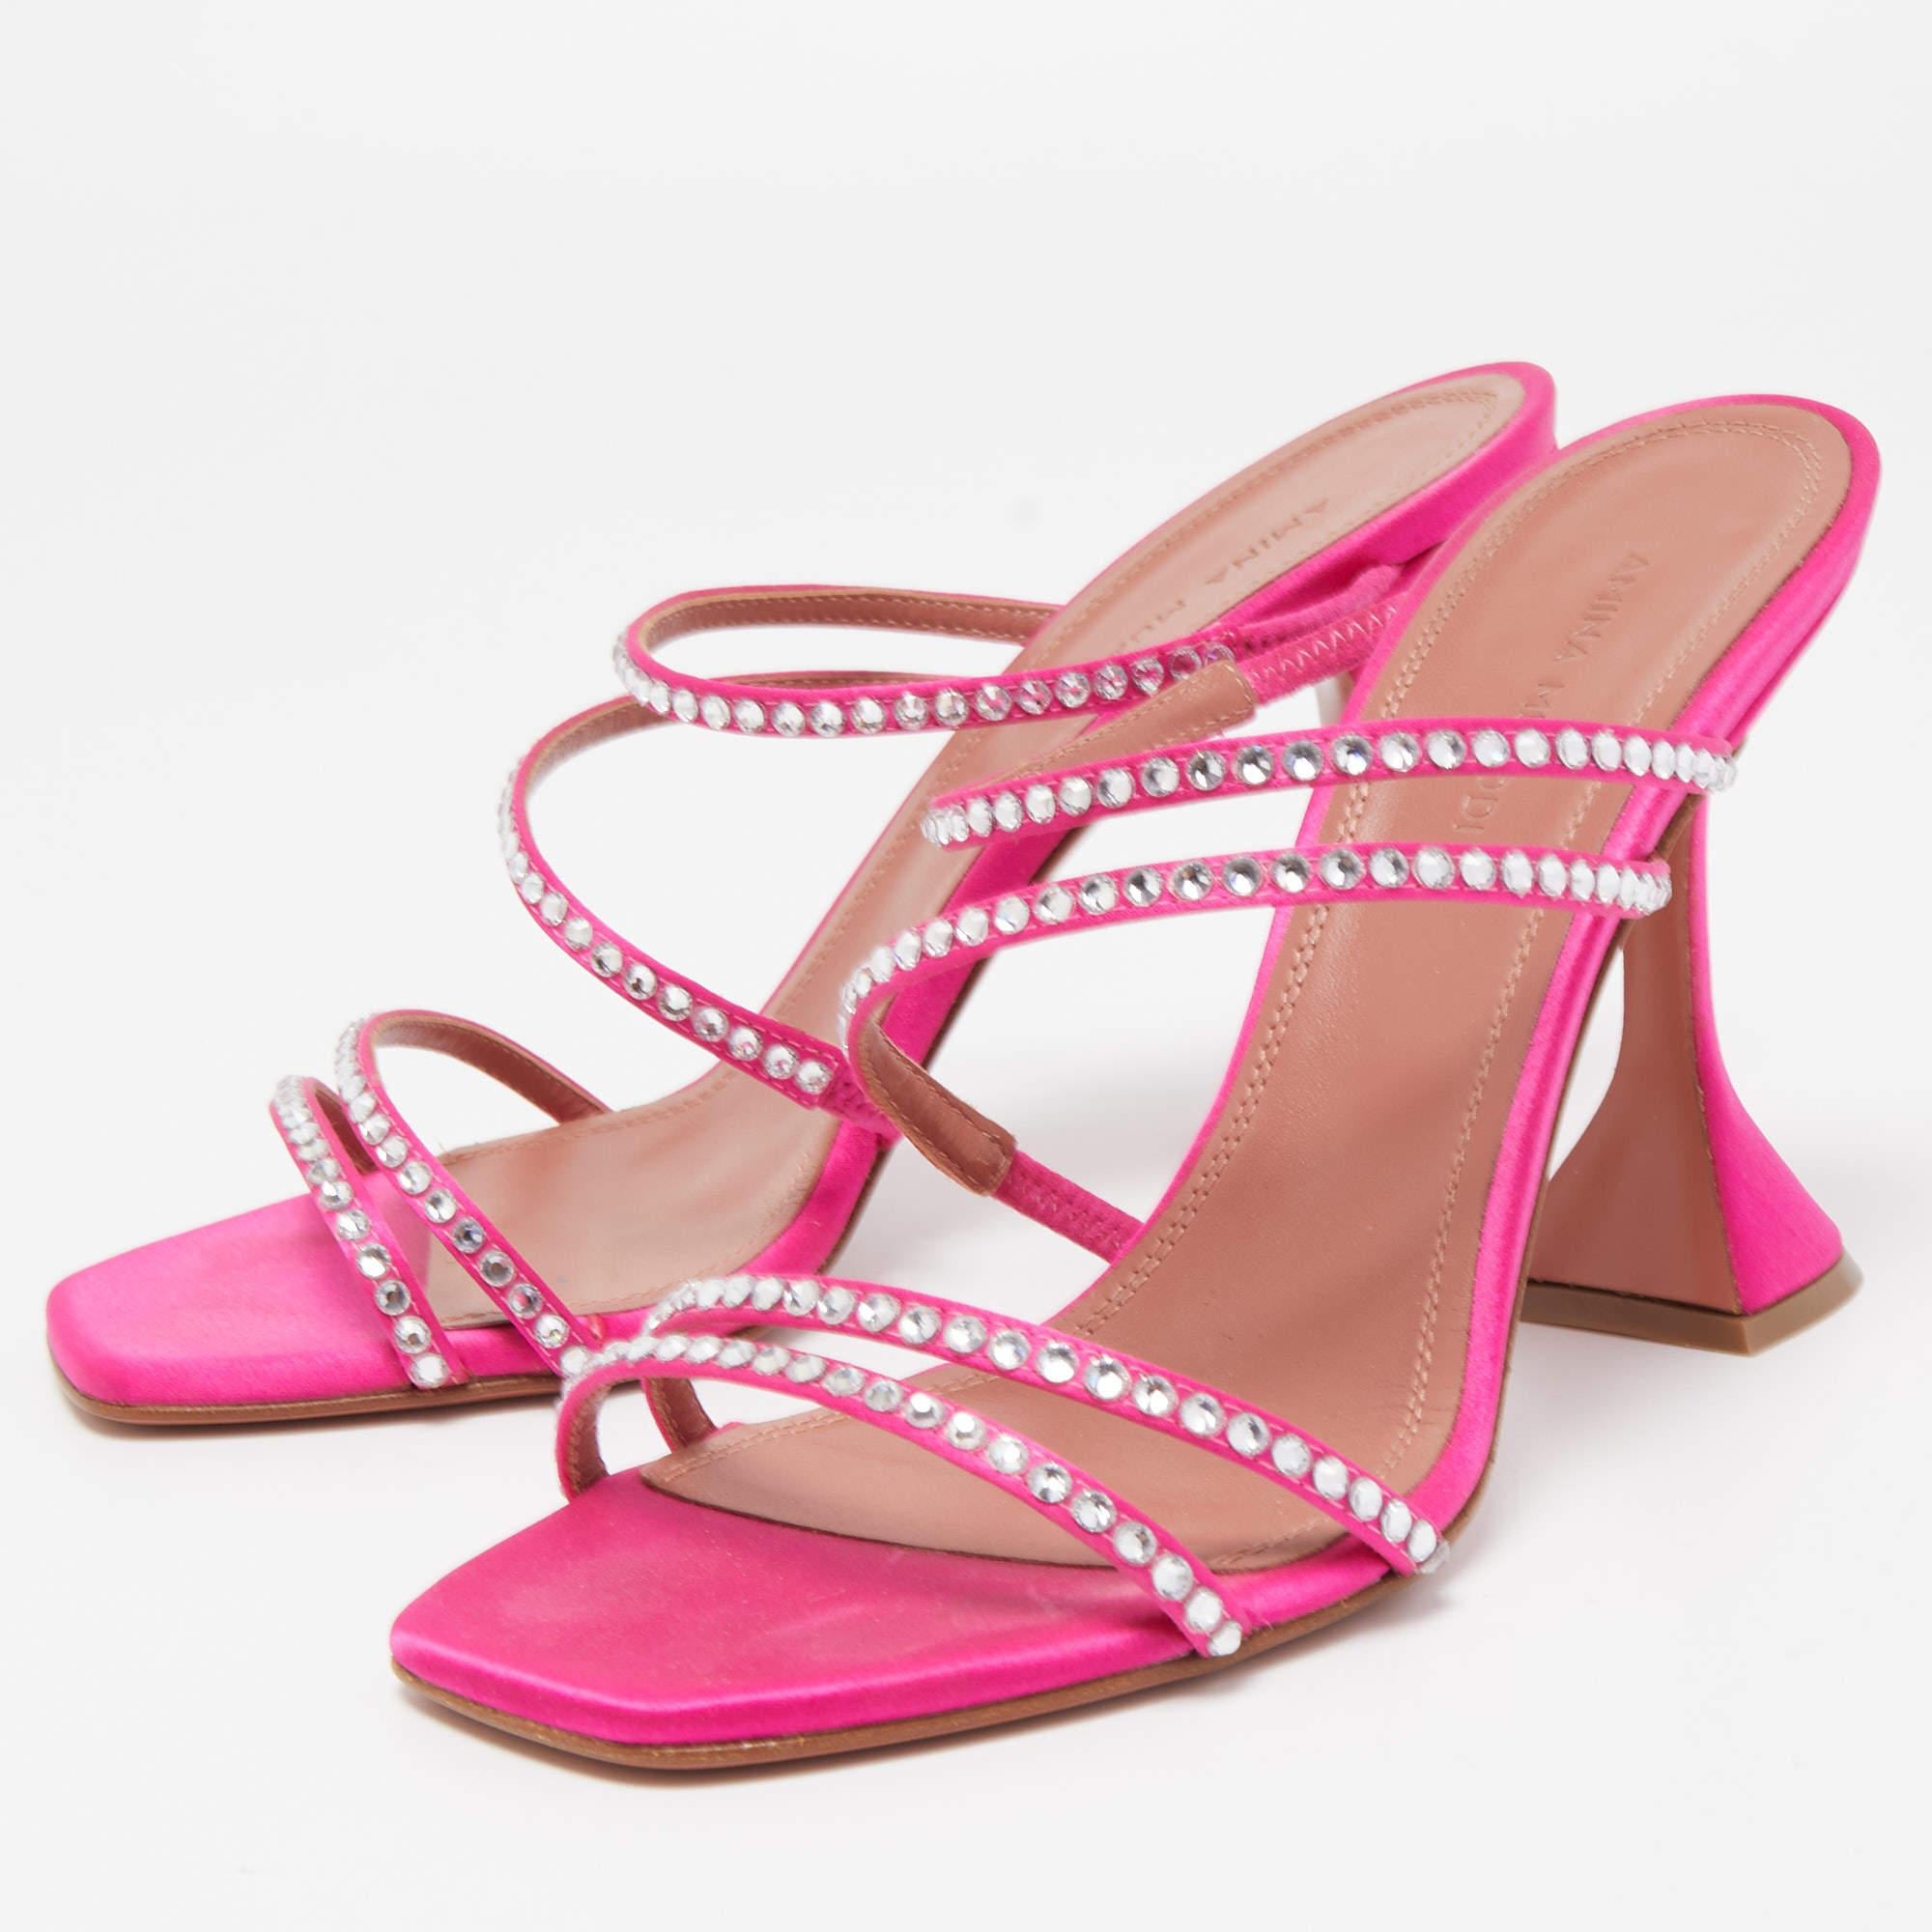 Amina Muaddi Pink Satin Gilda Crystal Embellished Sandals Size 37 1